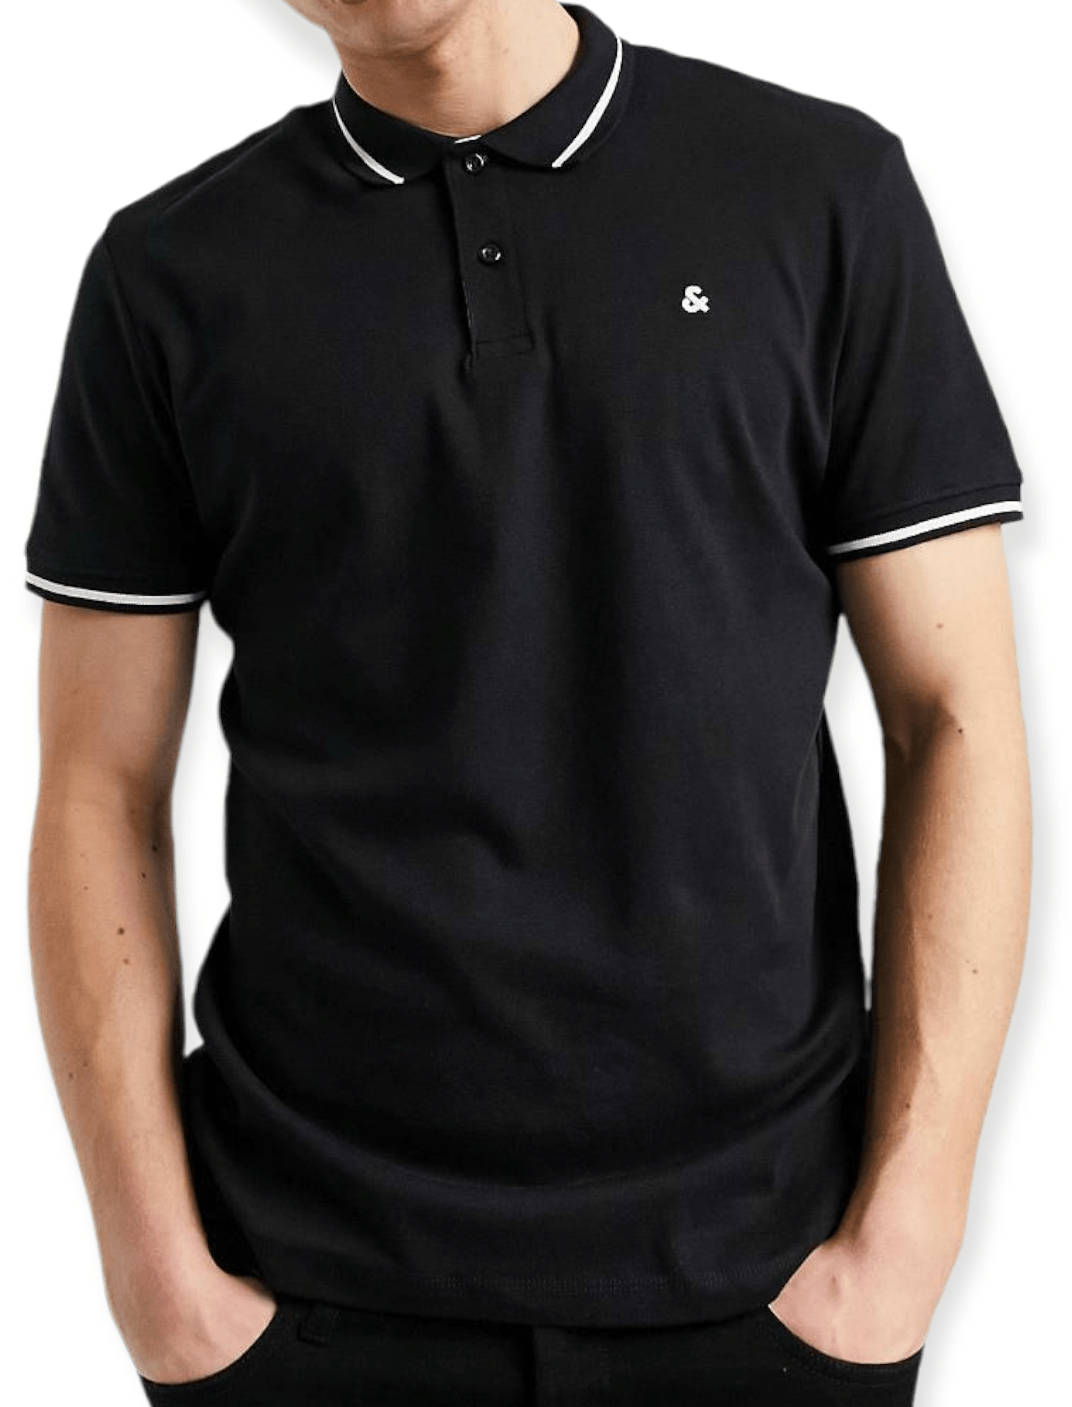 ElOutlet - Men Summer Polo Shirts JJ Polo Shirt - Black